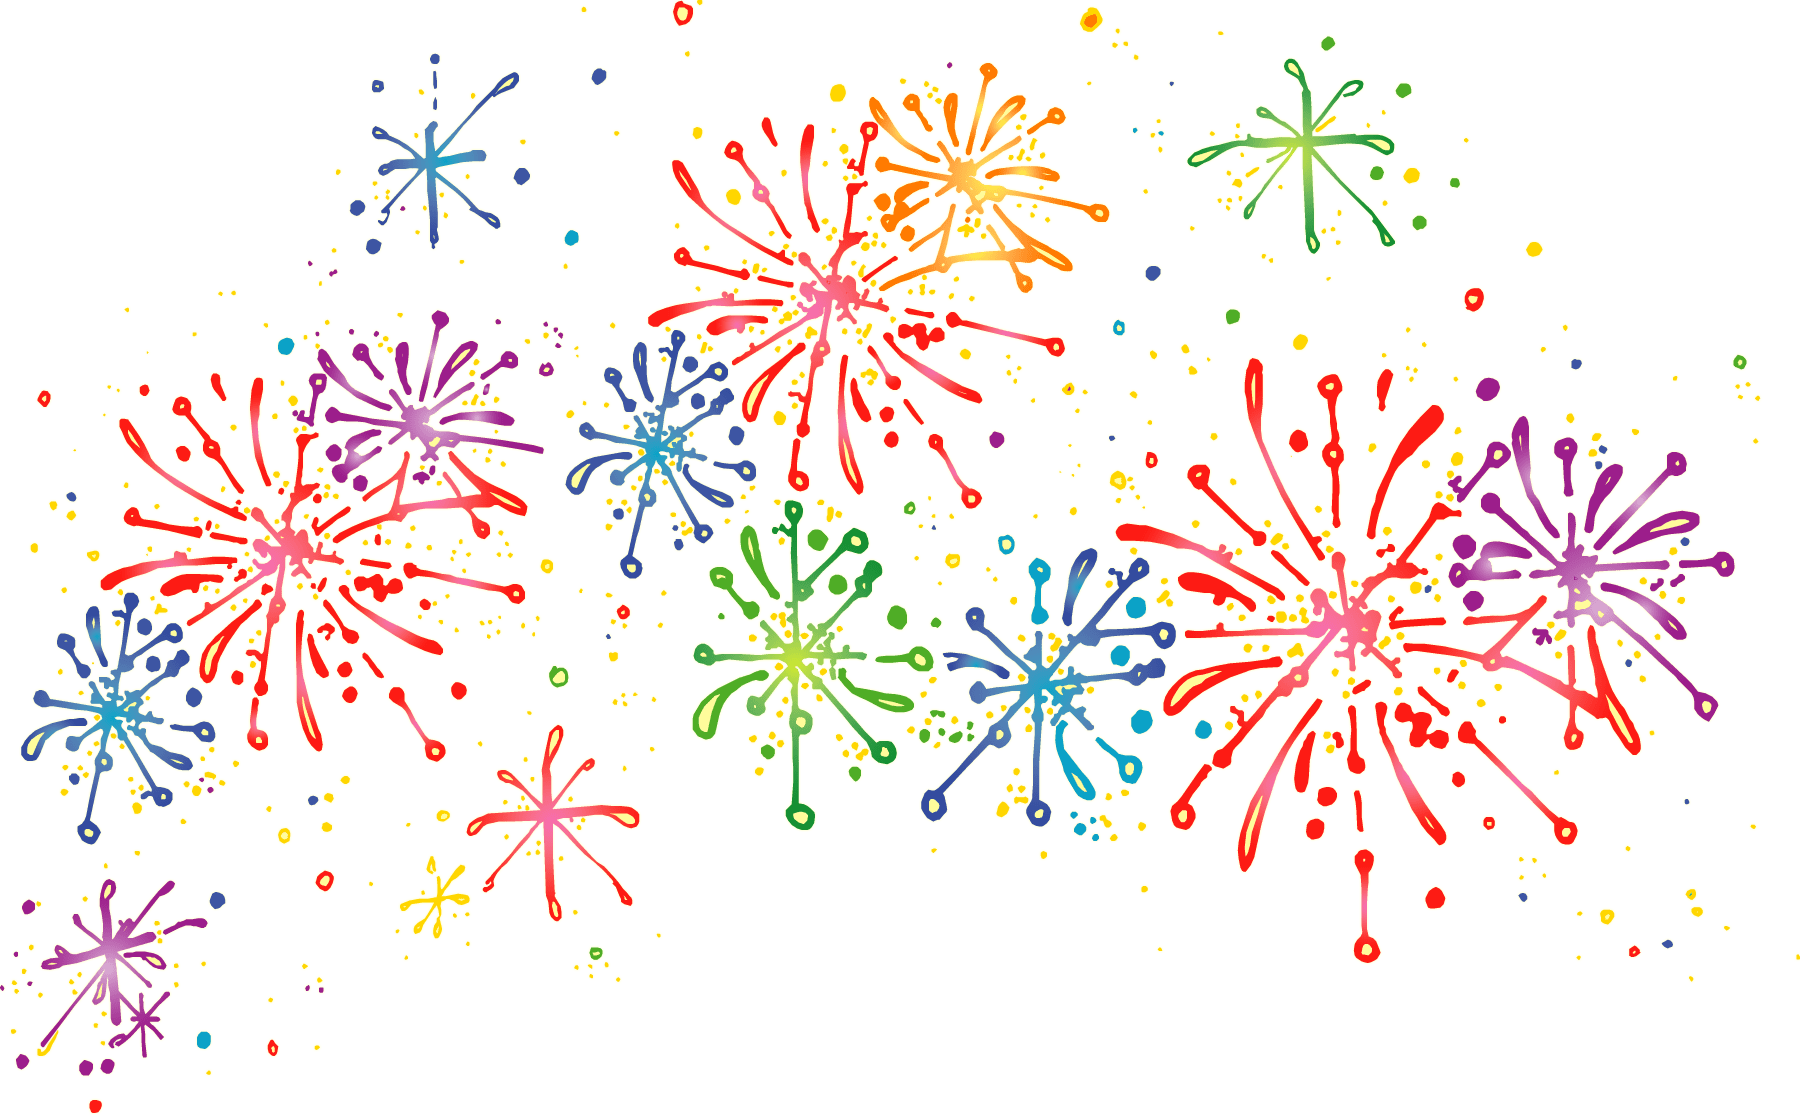 fireworks clipart festivity